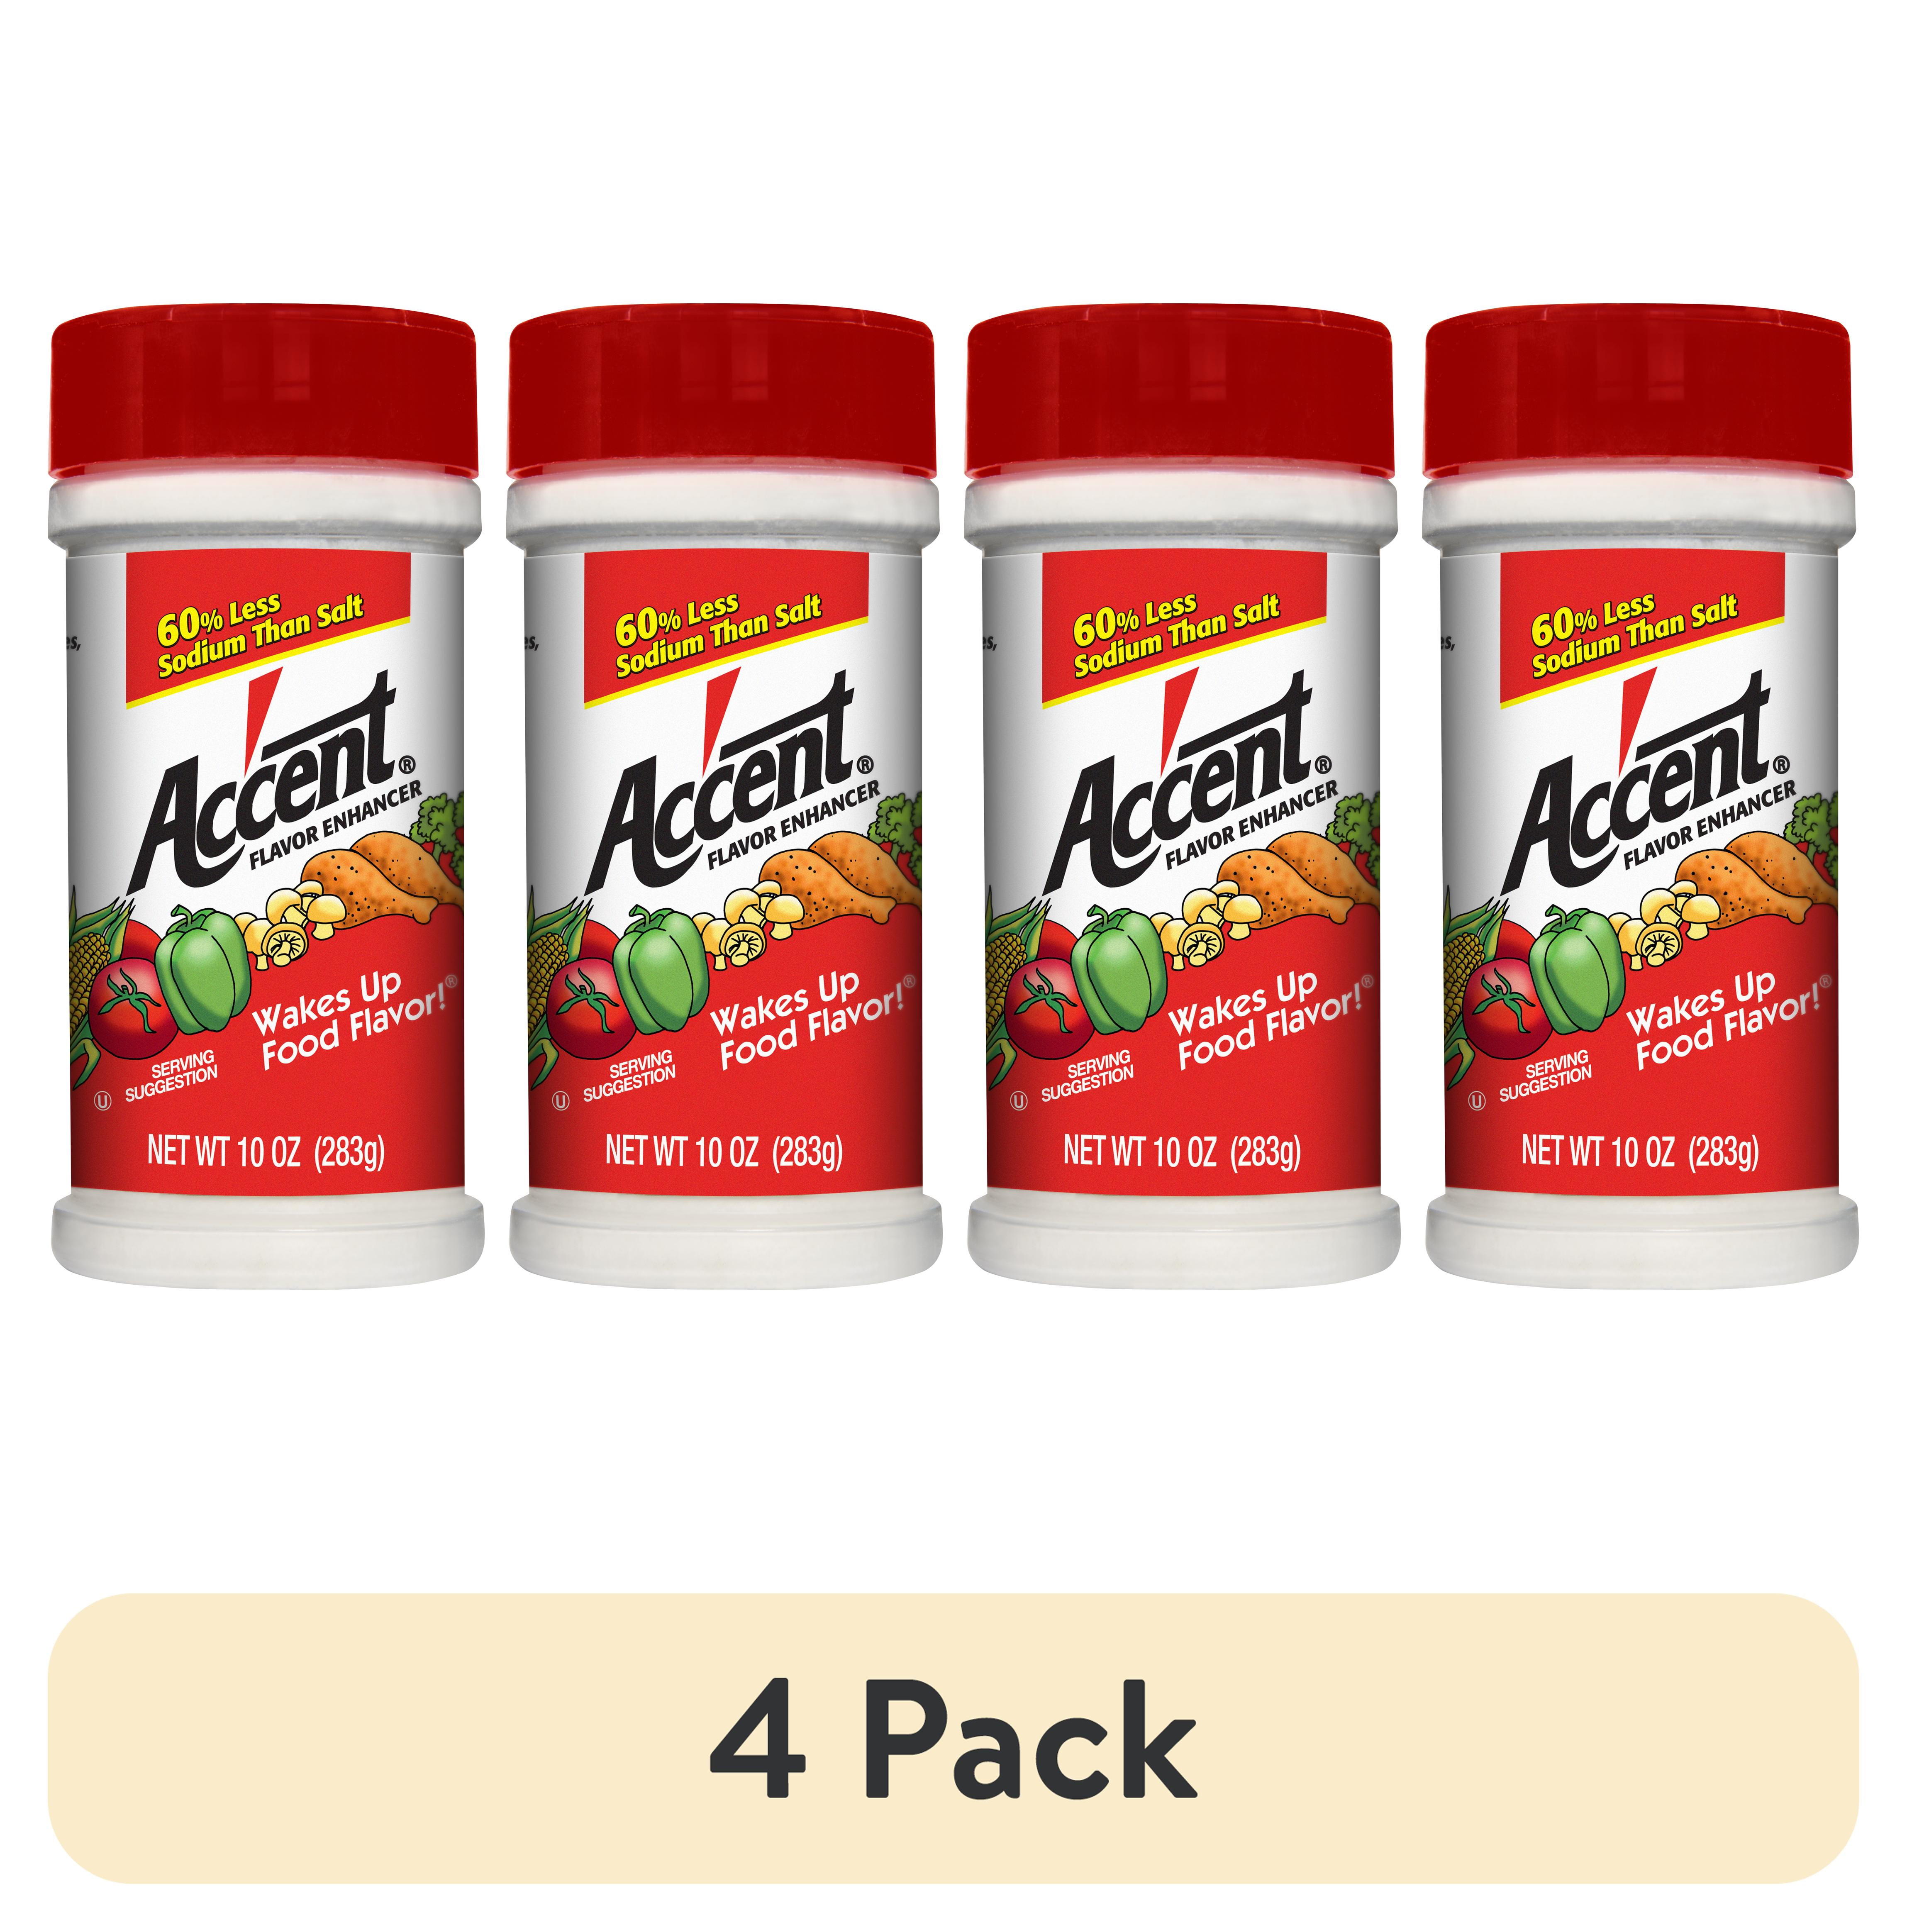 Accent Flavor Enhancer Case